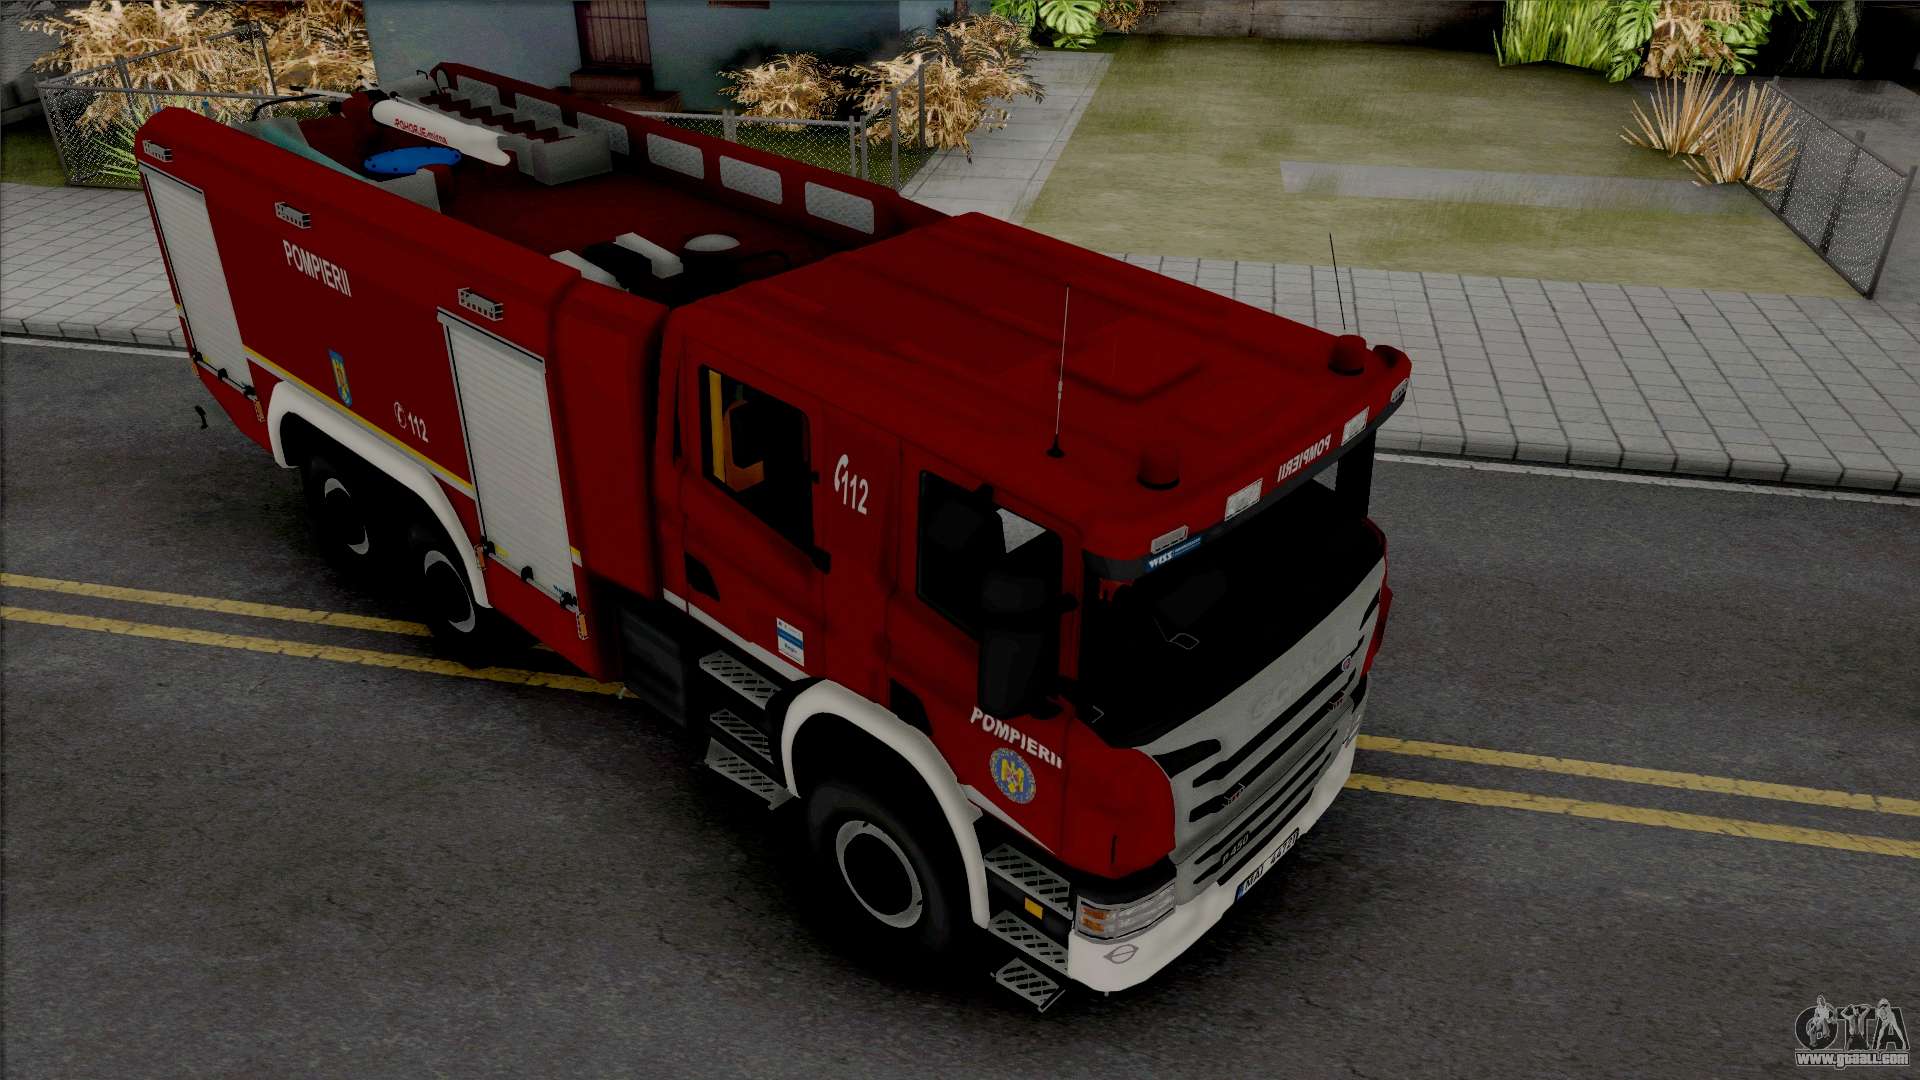 Scania P450 Pompierii For Gta San Andreas